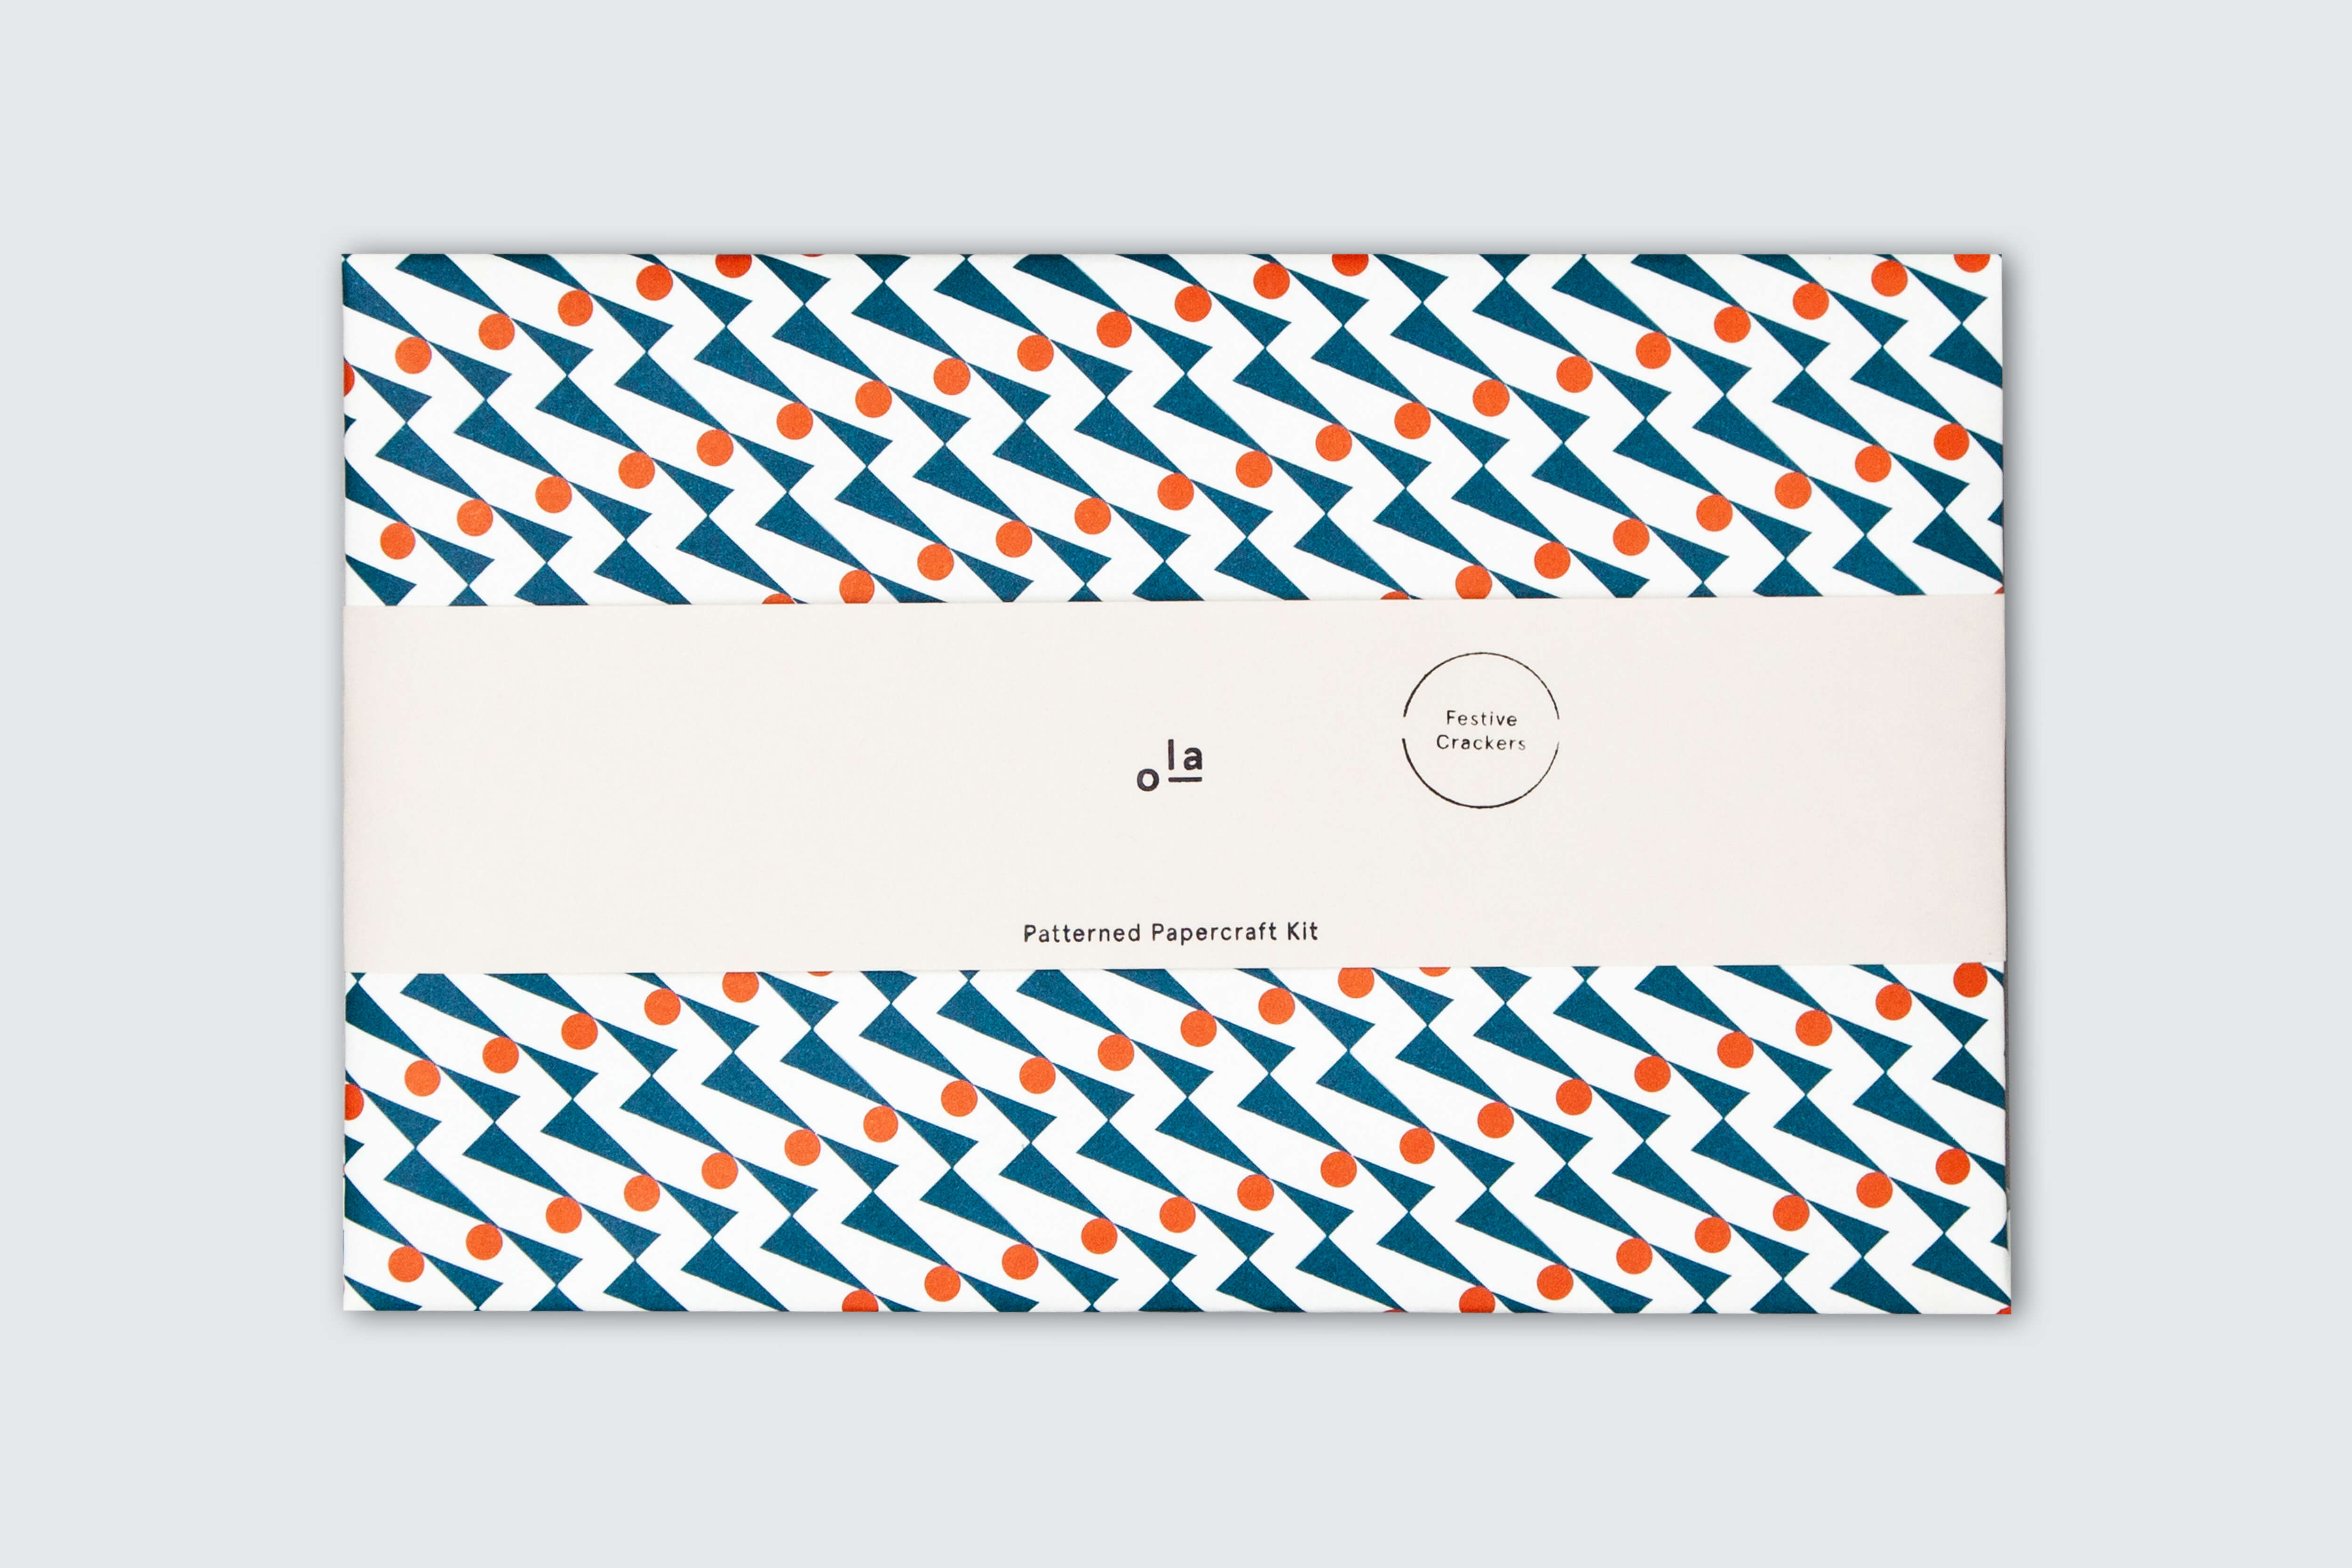 Festive Crackers - Papercraft Kit | AW23 Mix | by Ola - Lifestory